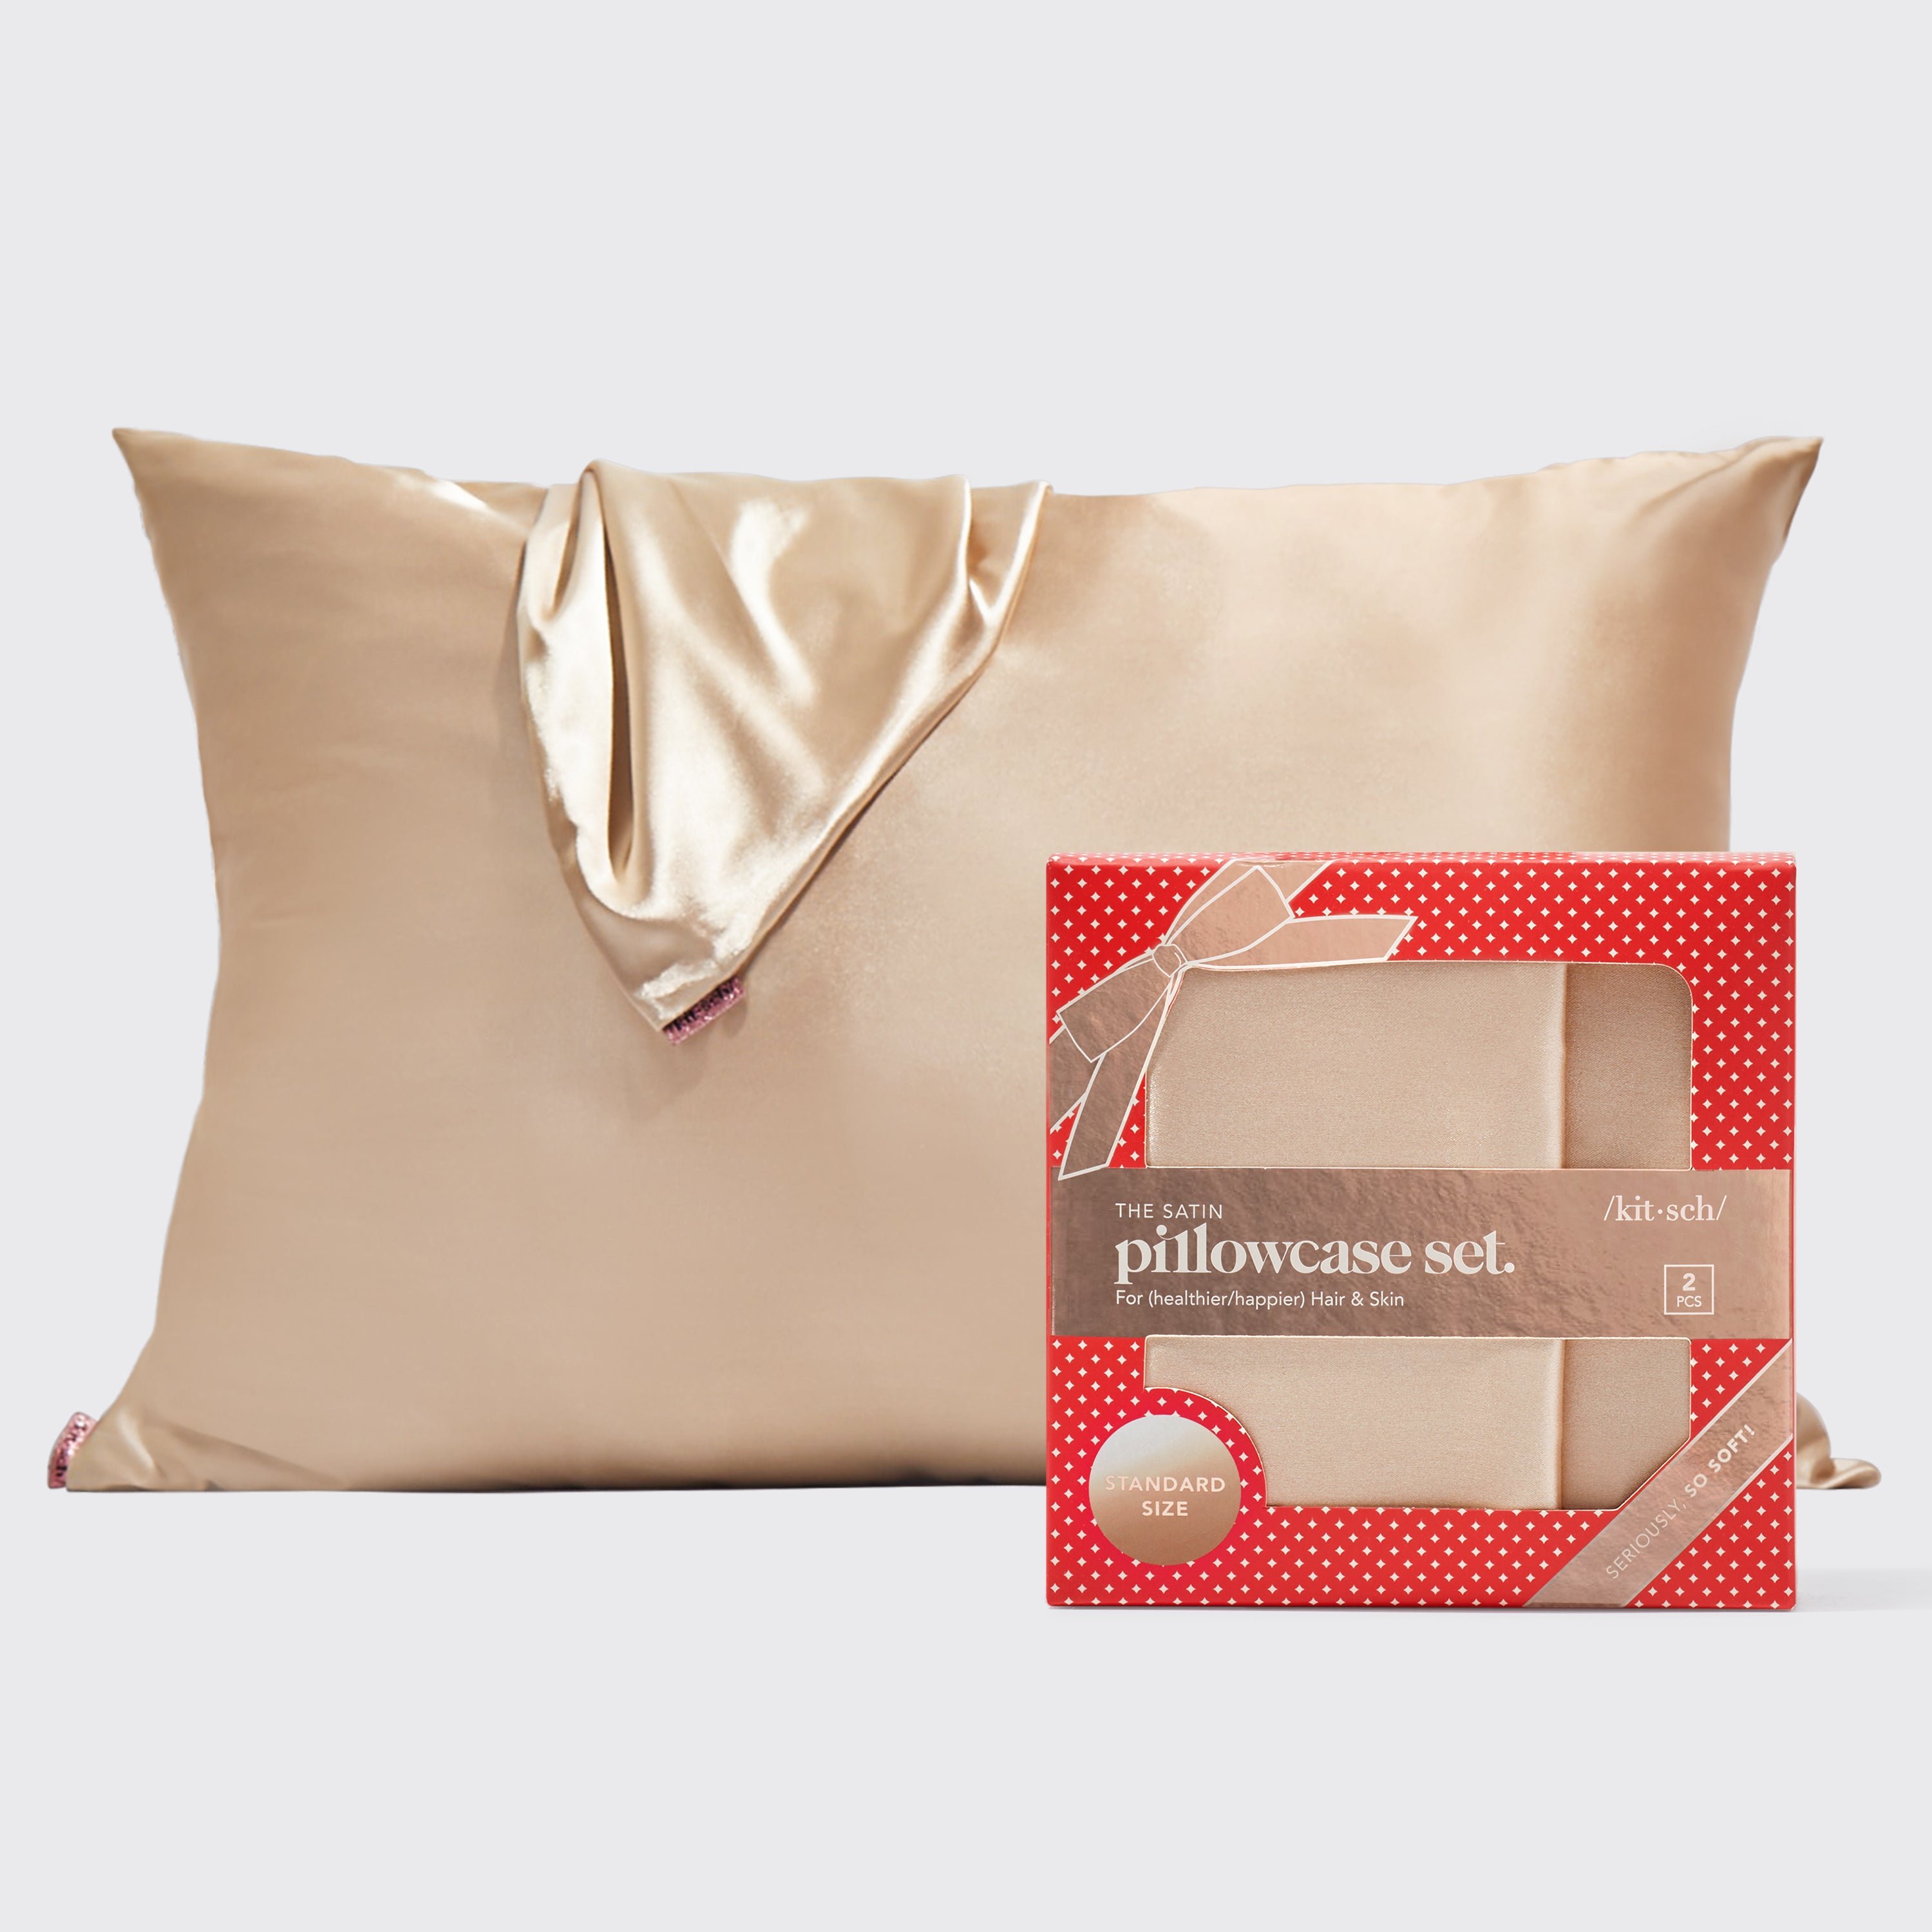 Kitsch Satin Pillowcase- Standard Size